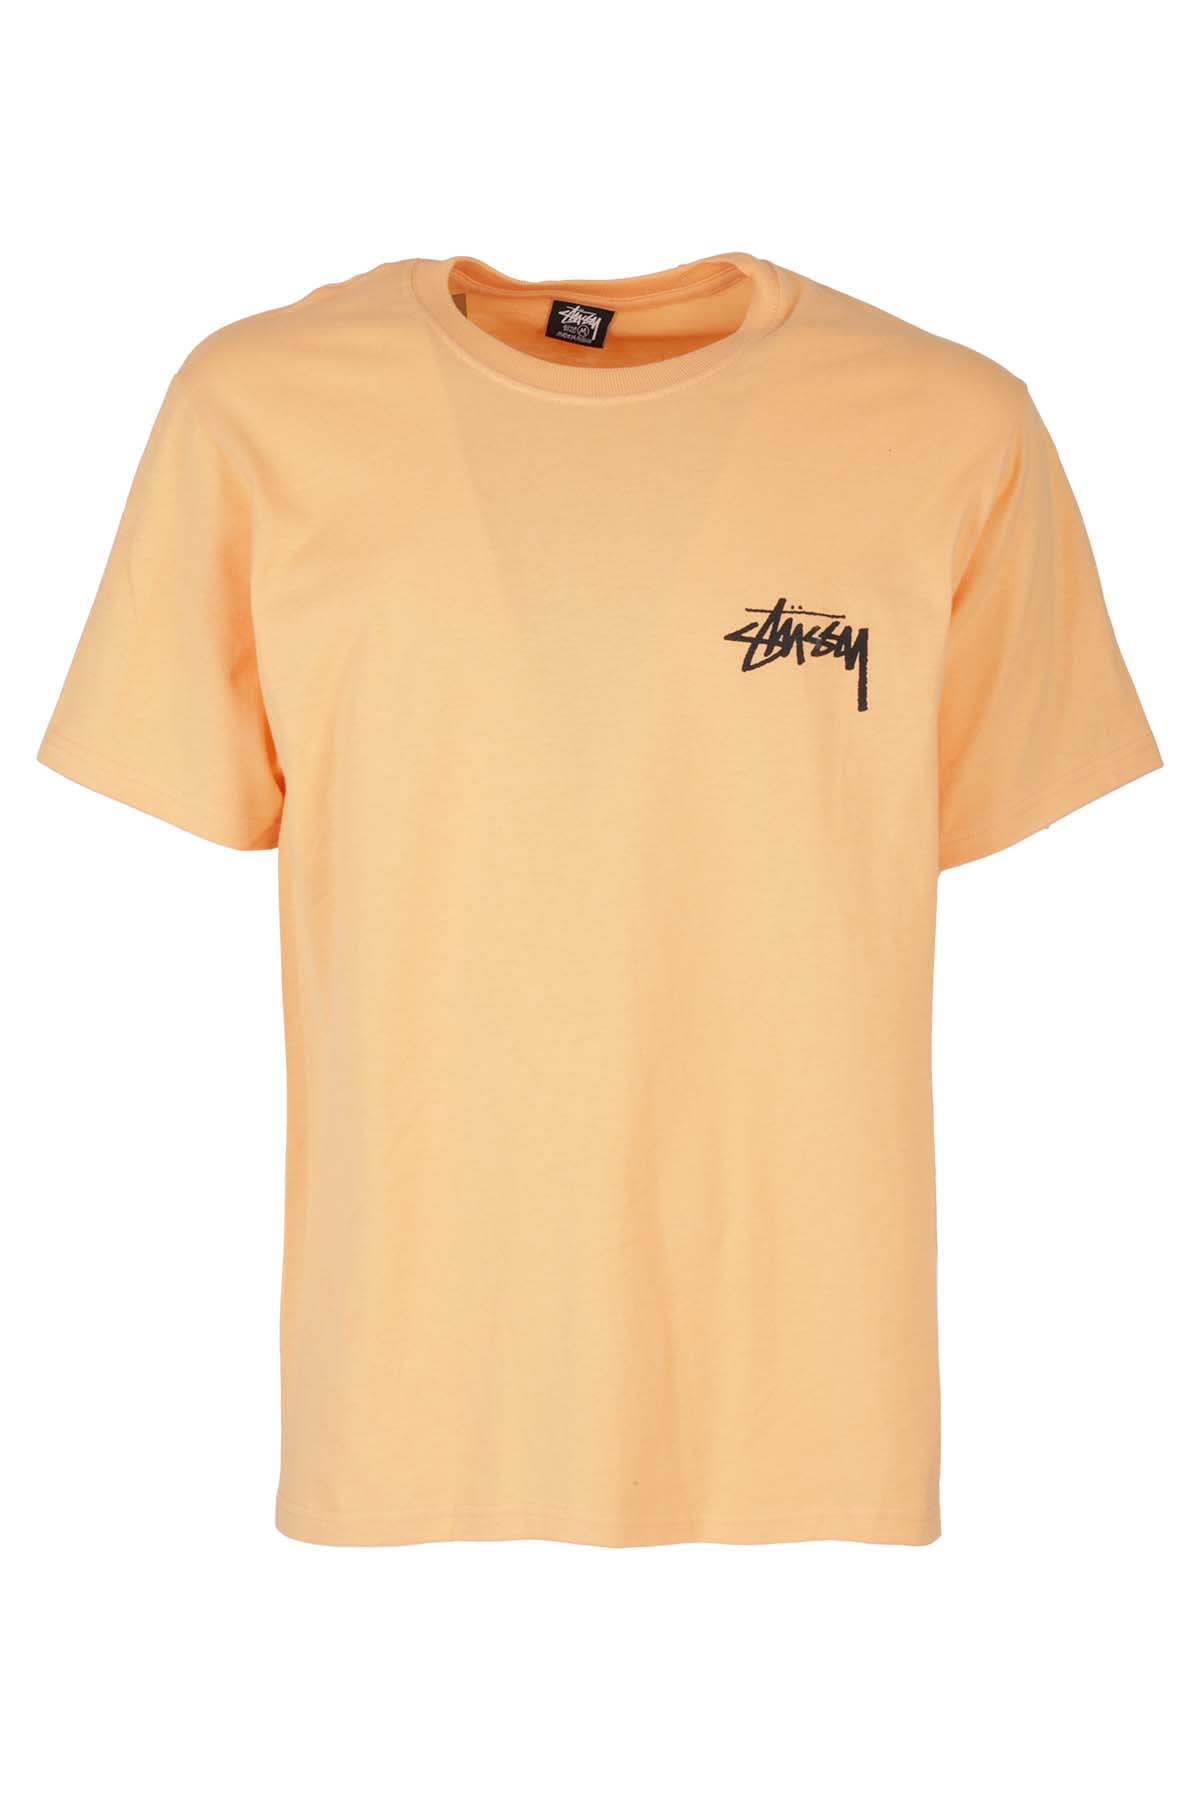 Stussy T-shirt In Peach